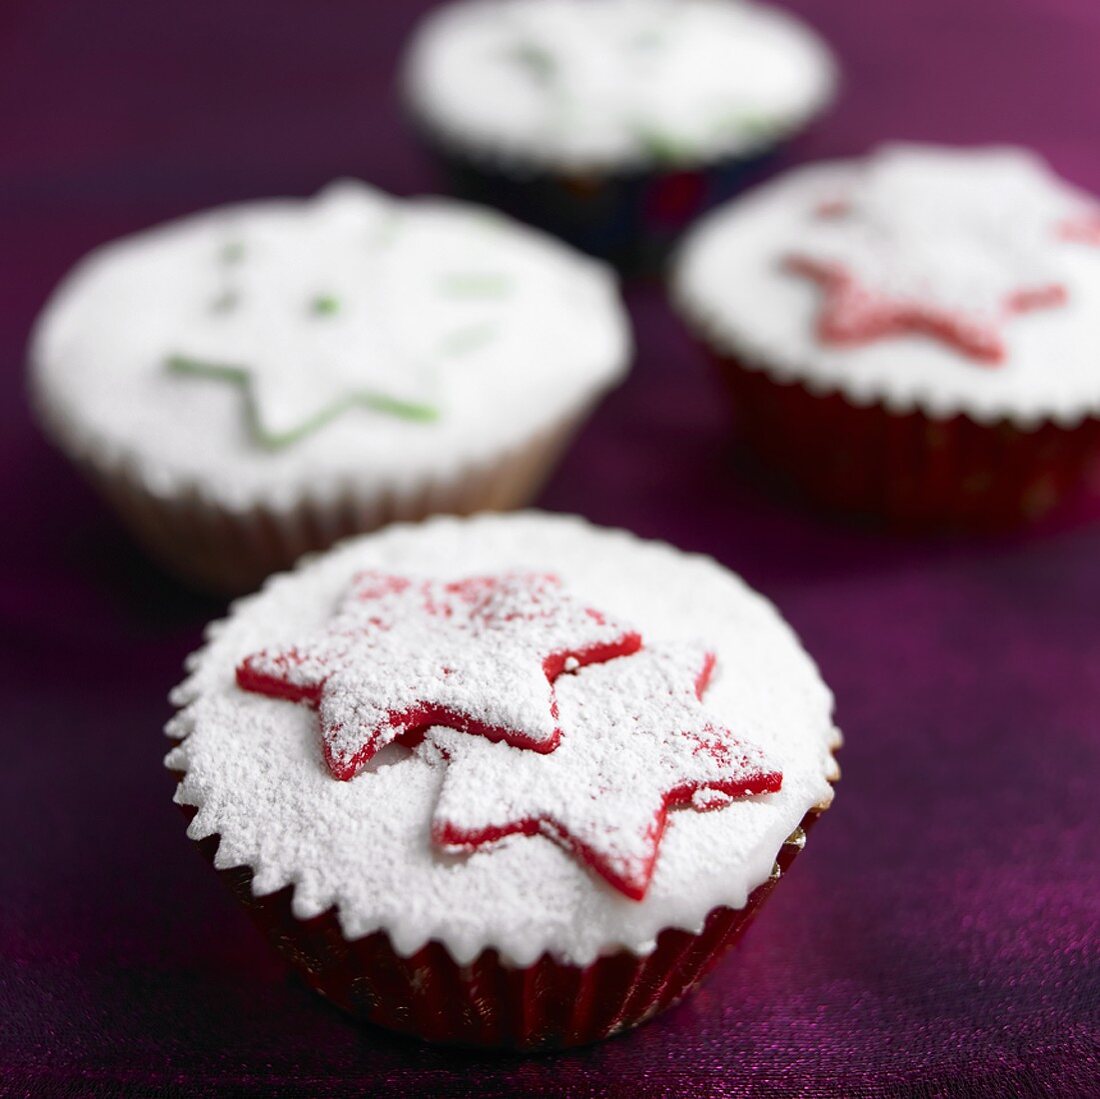 Christmas cupcakes with marzipan stars and icing sugar